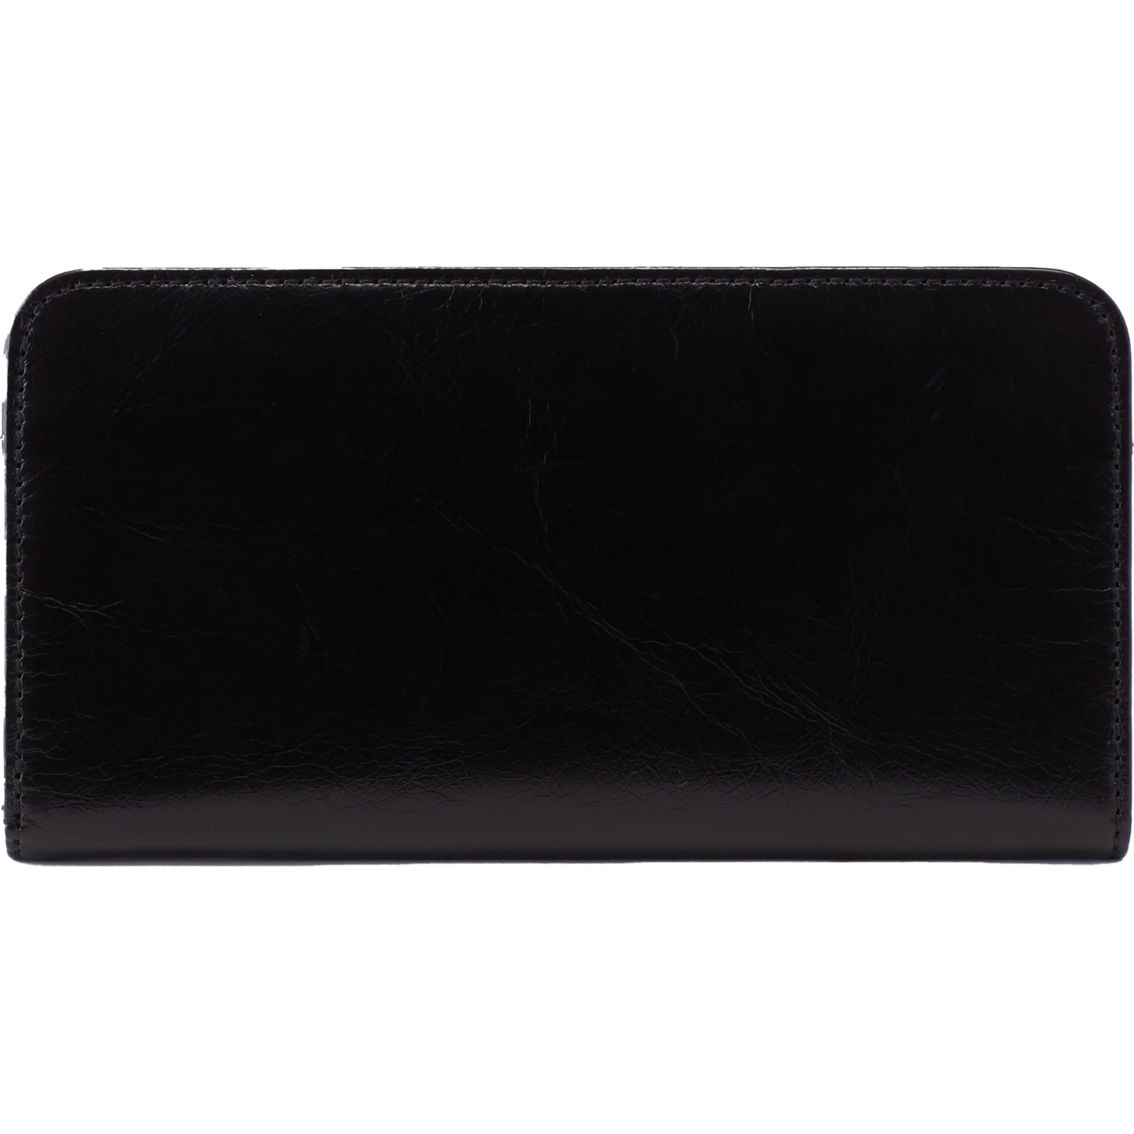 HOBO Angle Large Wallet, Black - Image 2 of 3